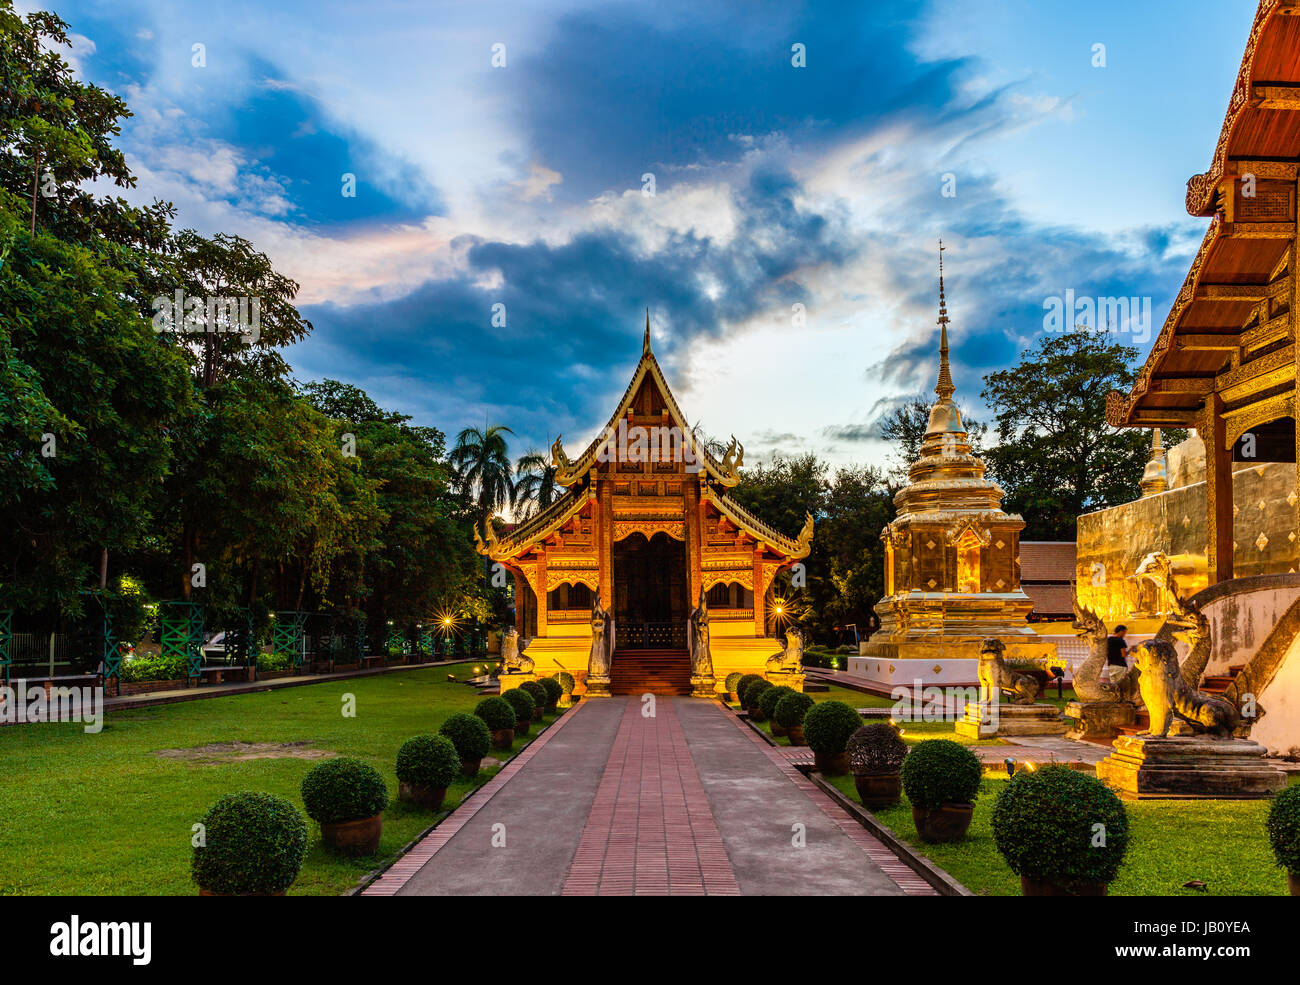 Wat Phra Singh Woramahaviharn. Buddhist temple in Chiang Mai, Thailand. Stock Photo